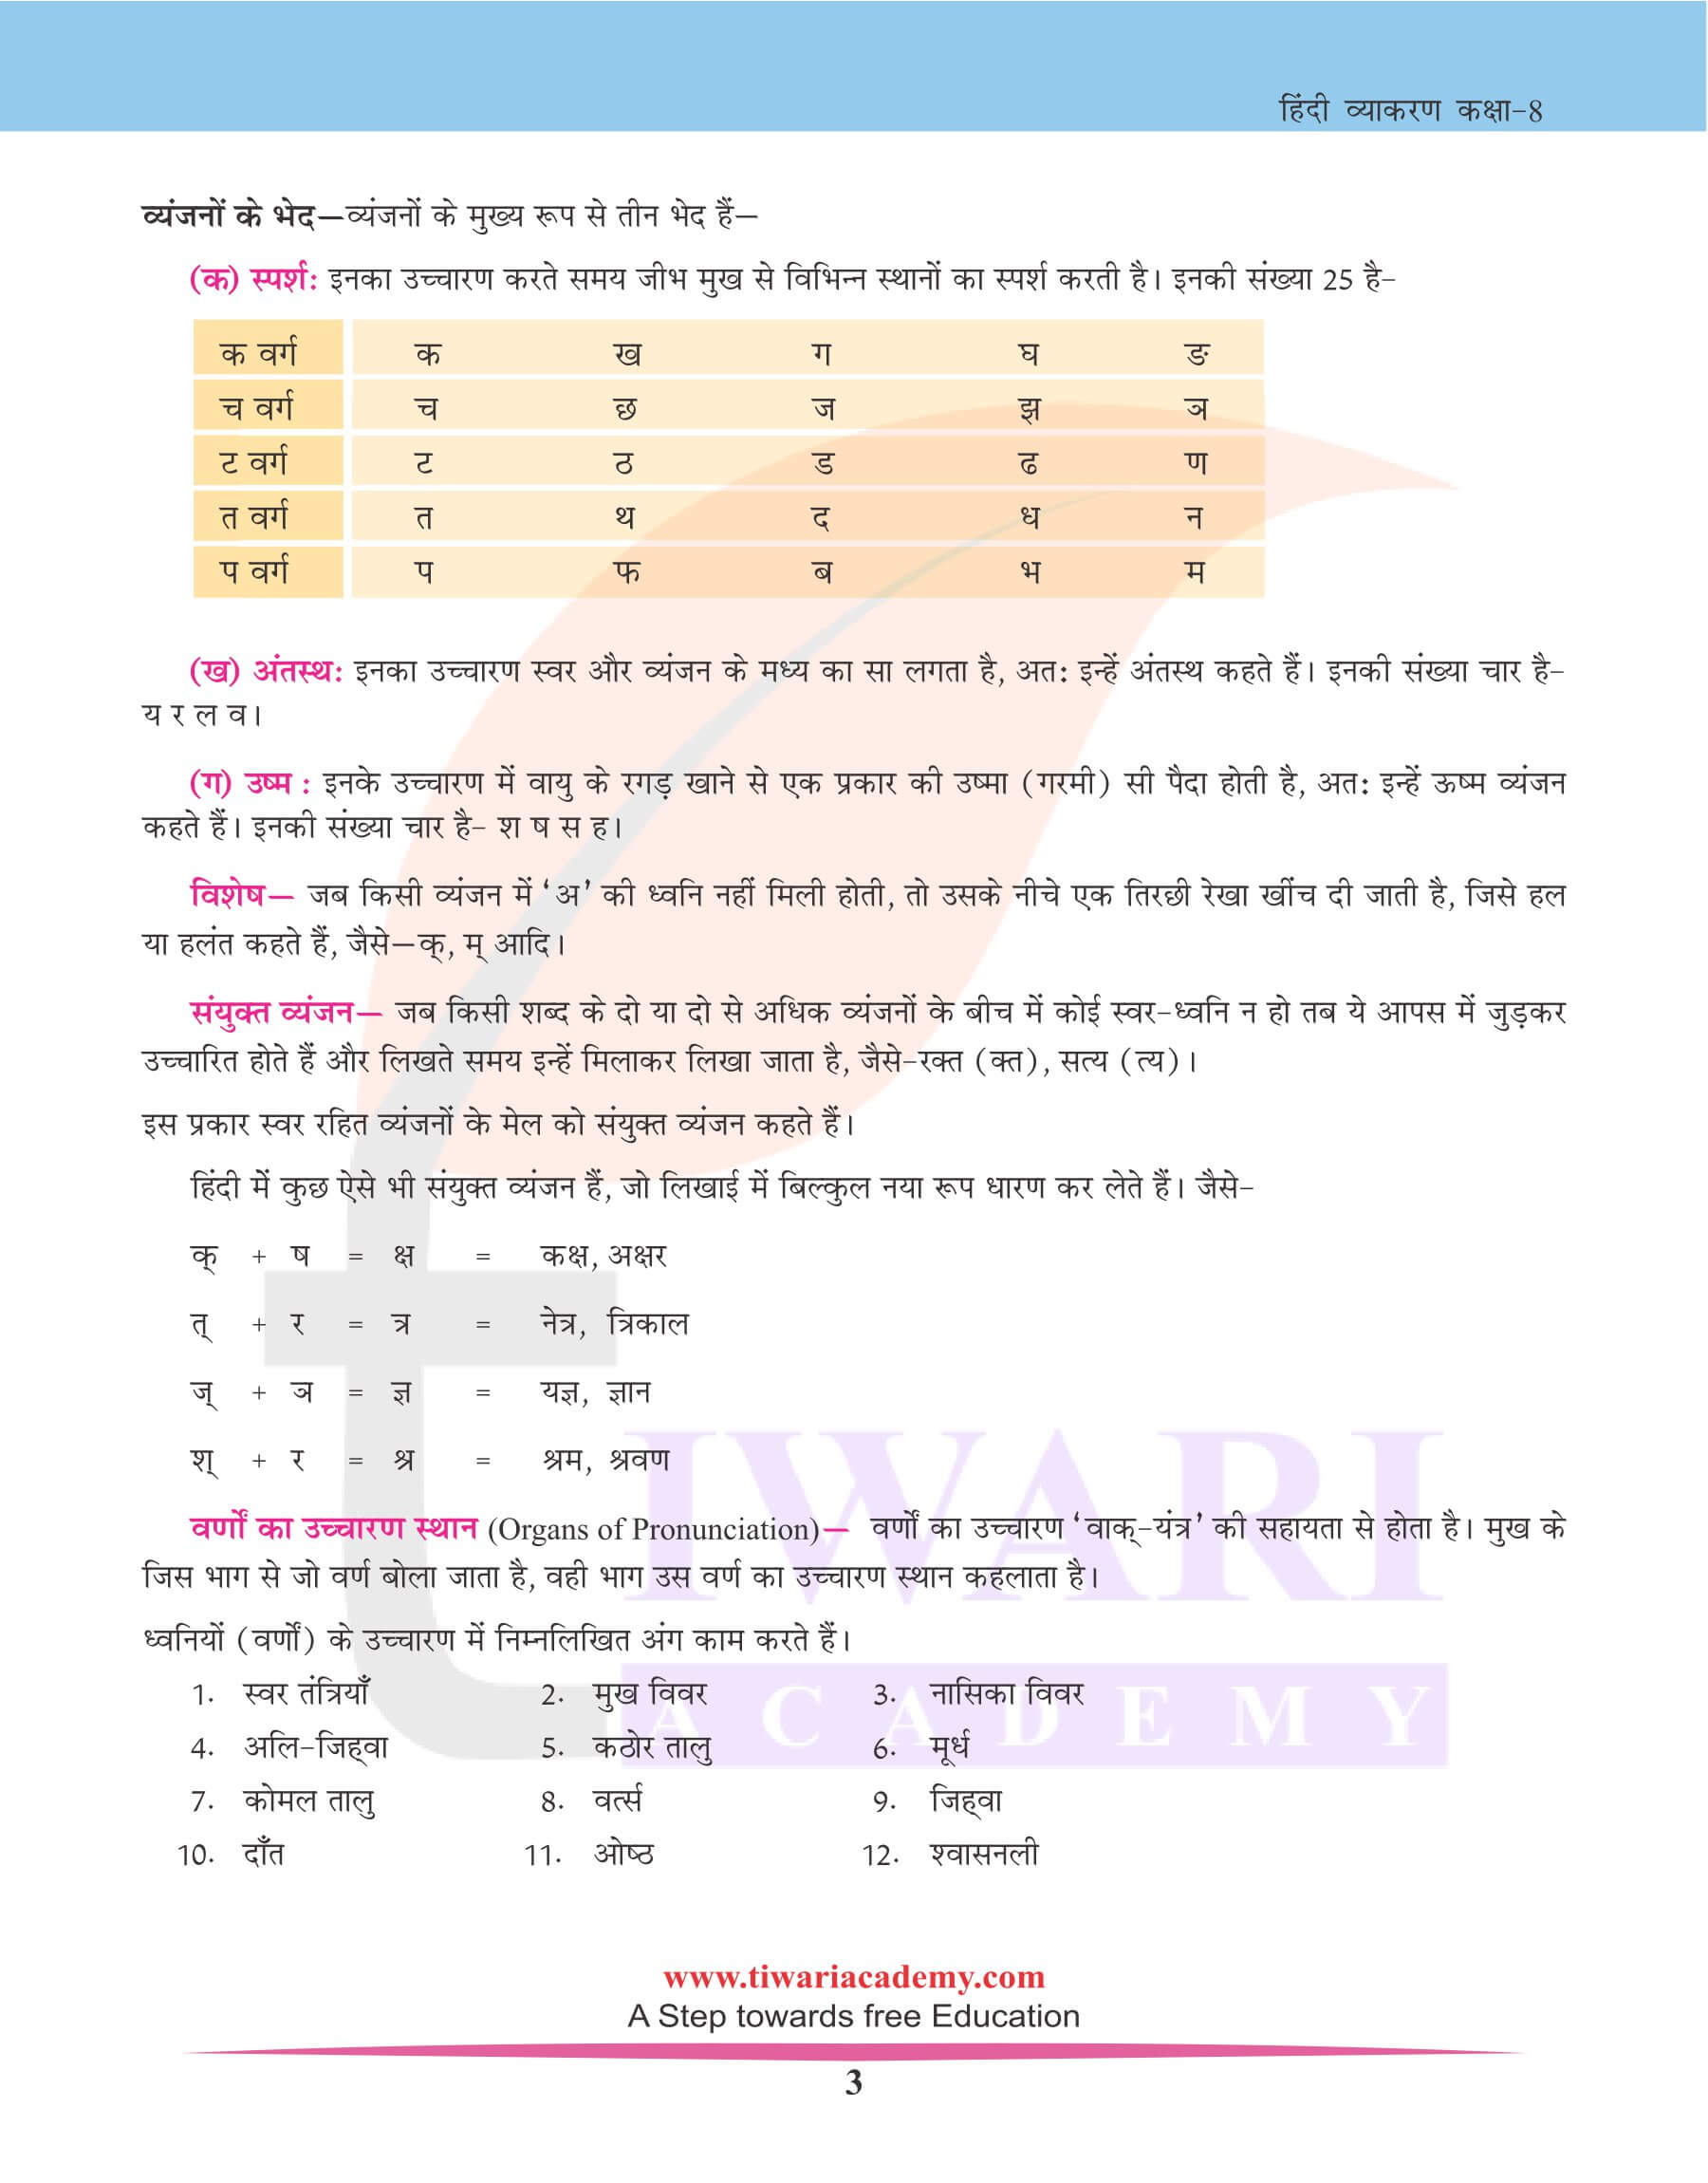 कक्षा 8 हिंदी व्याकरण अध्याय 2 वर्ण विचार के प्रश्न अभ्यास